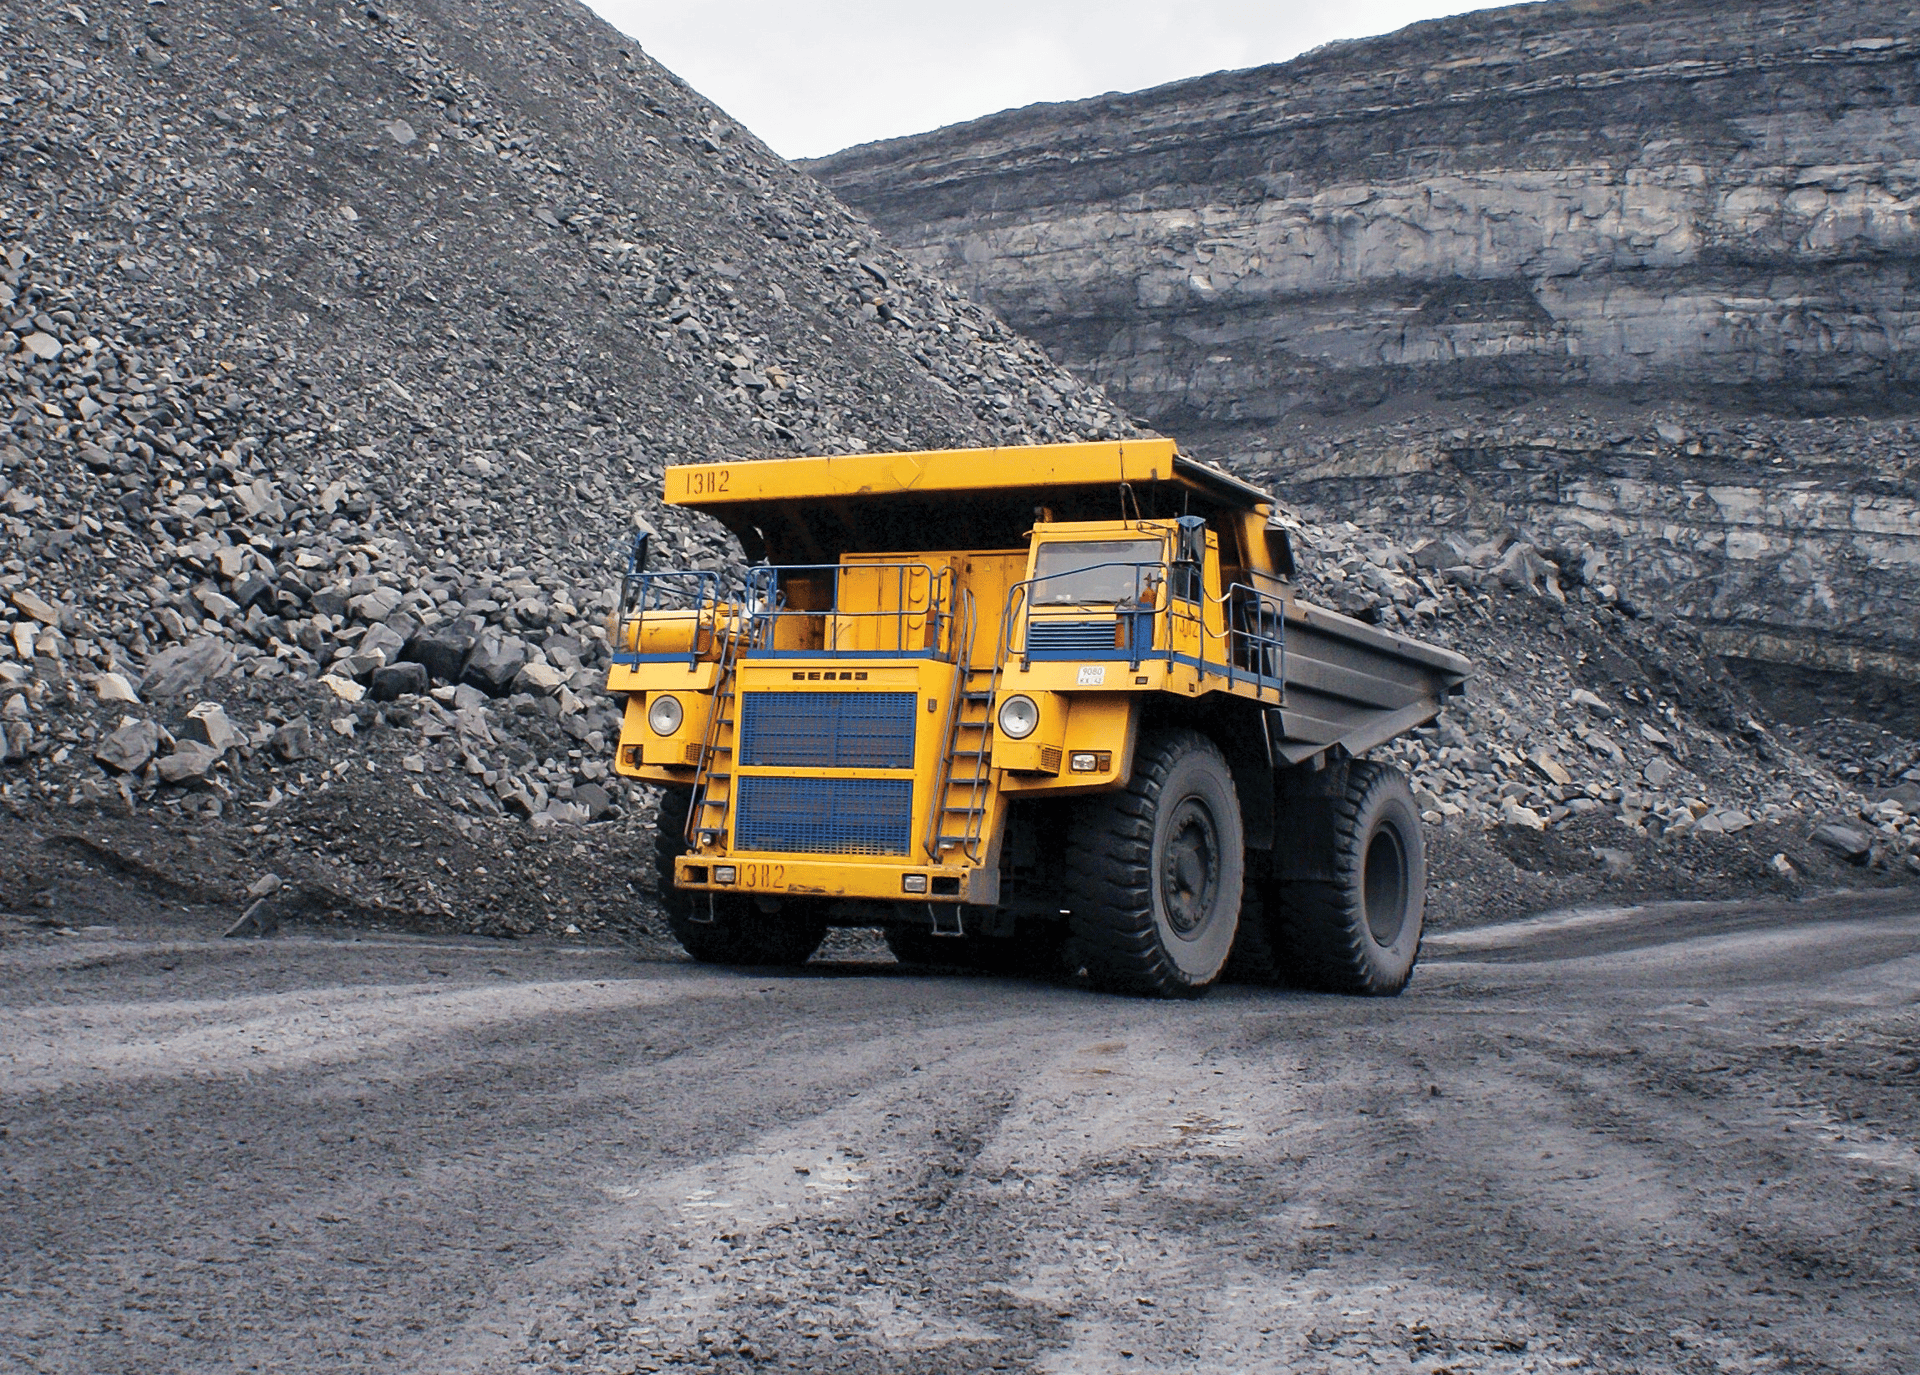 Truck on mining road